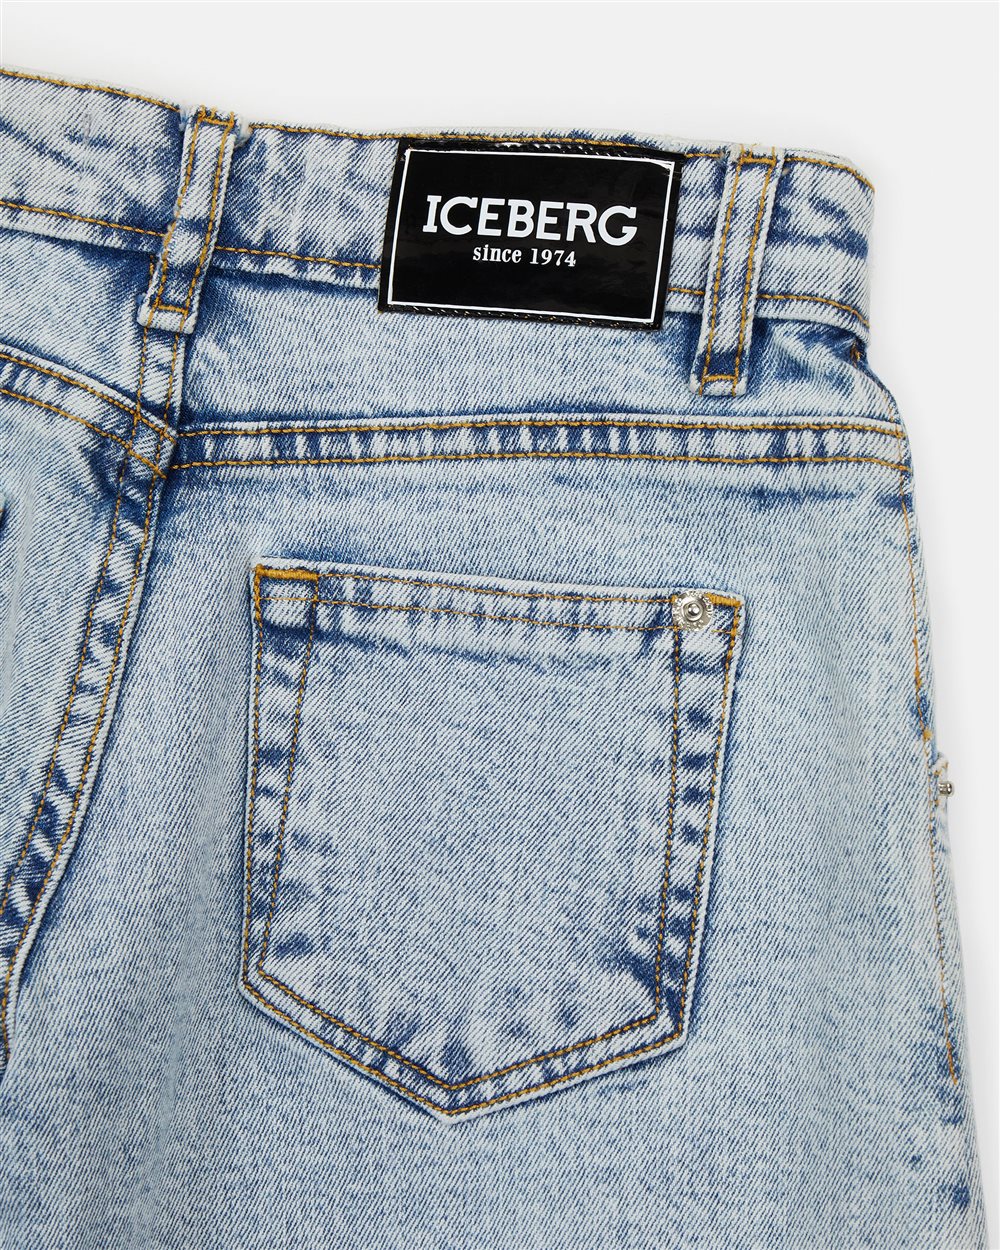 Wide leg bluejeans - Iceberg - Official Website